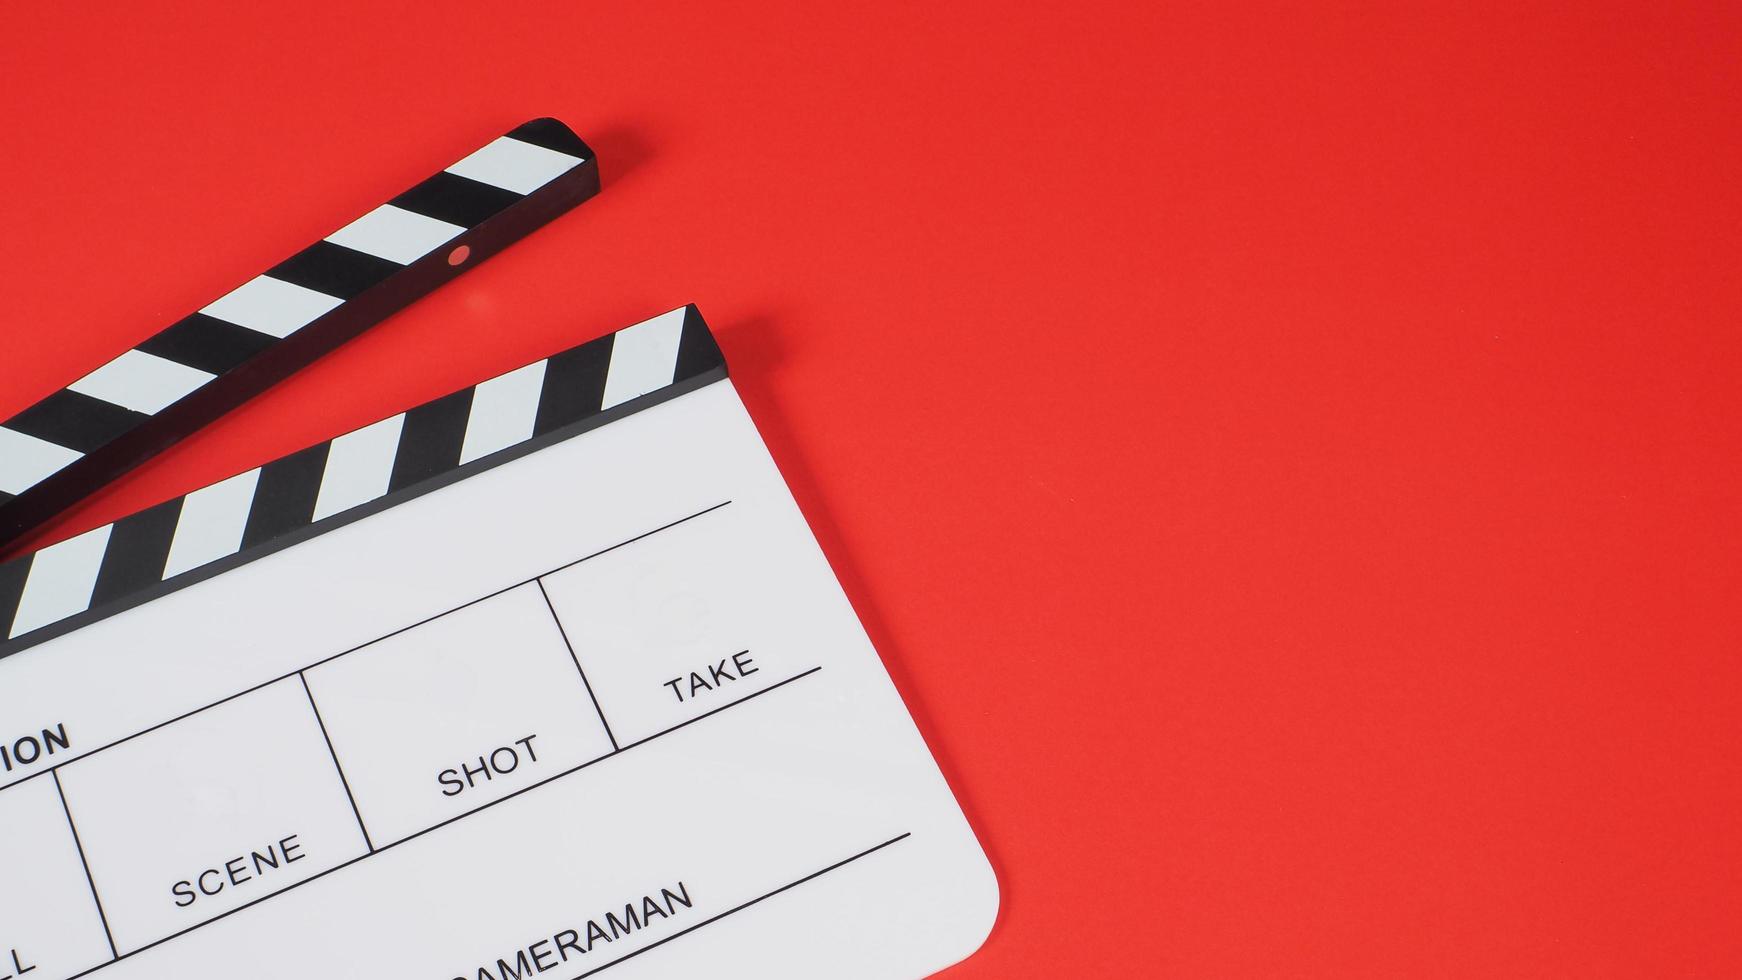 Filmklapper of filmlei op rode background.it gebruiken in videoproductie en filmindustrie. foto